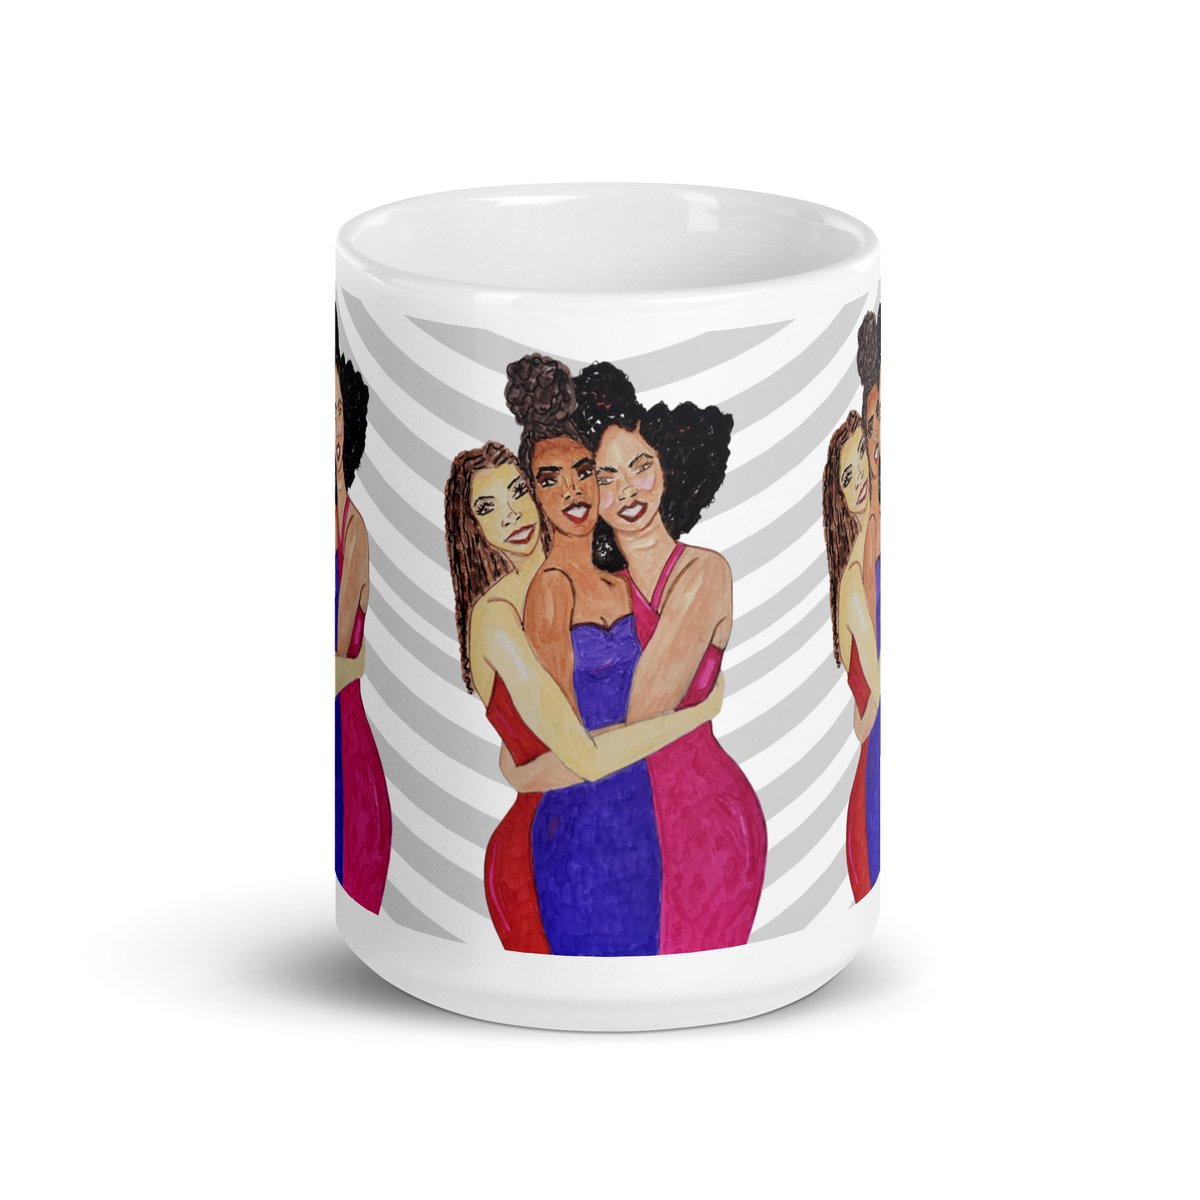 Image of Girlfriends Coffee Mug